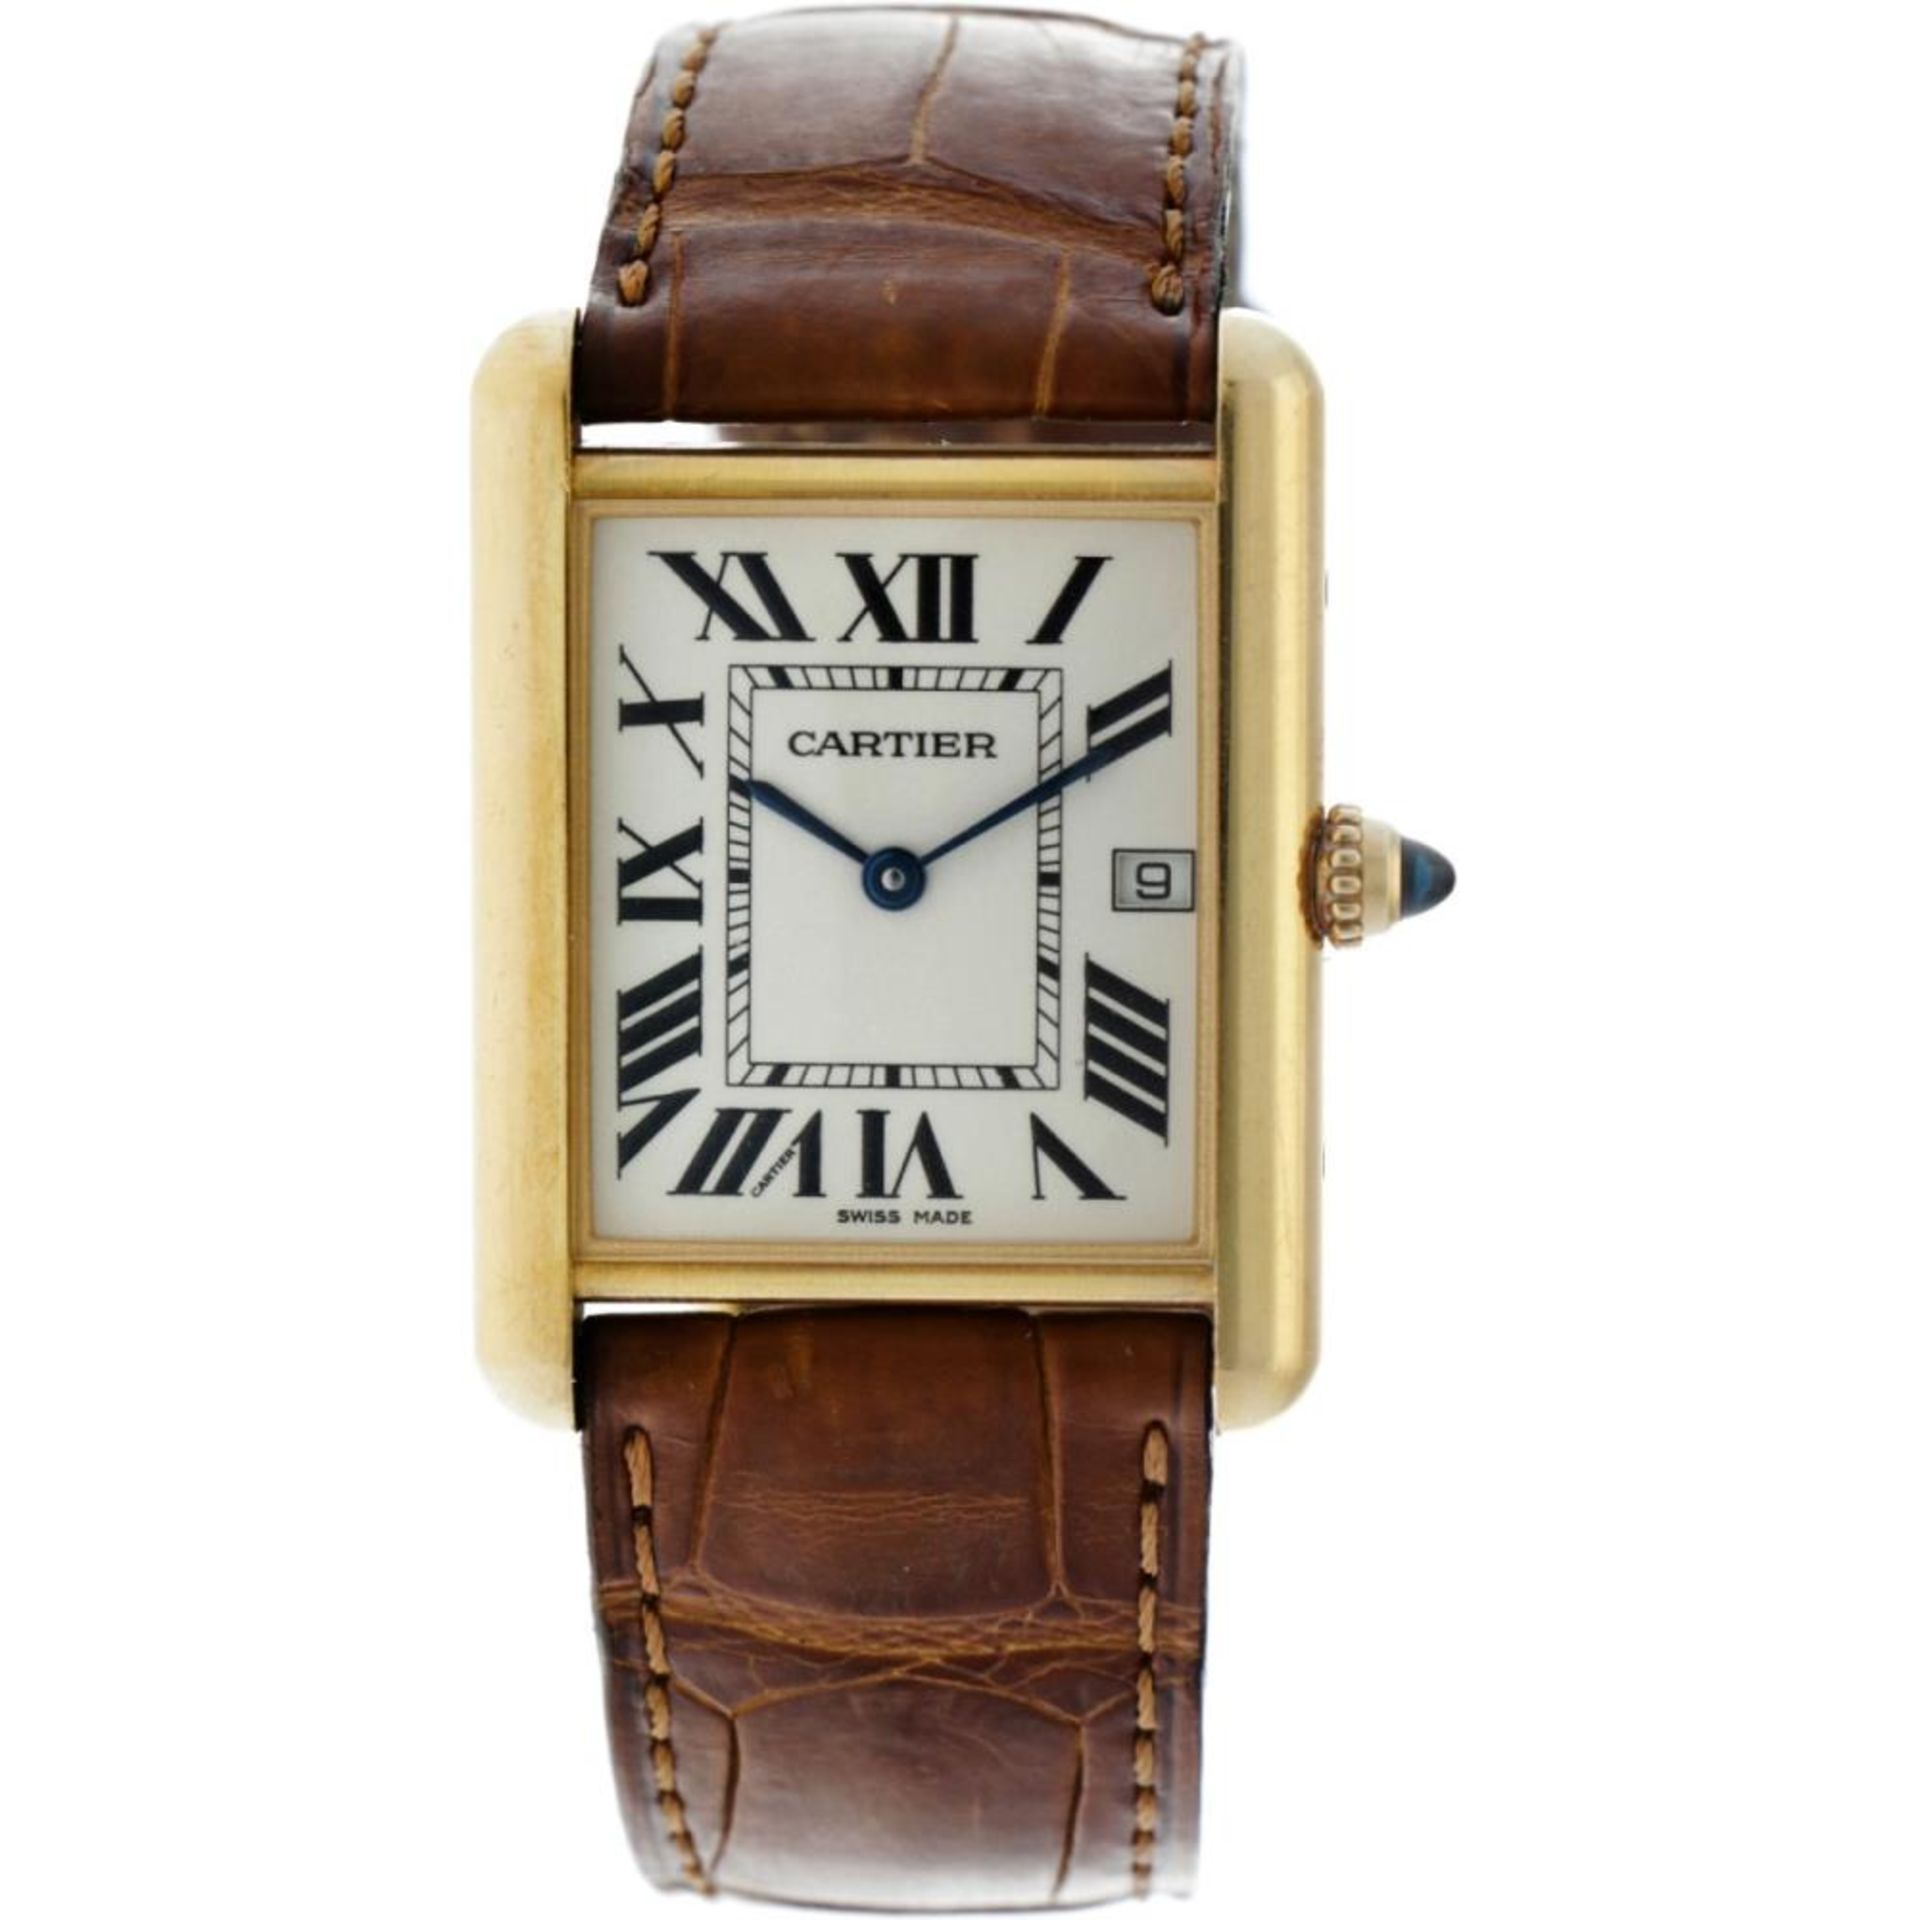 Cartier Tank Louis 2441 - 18 carat gold - Men's watch - approx. 2005. - Image 2 of 10